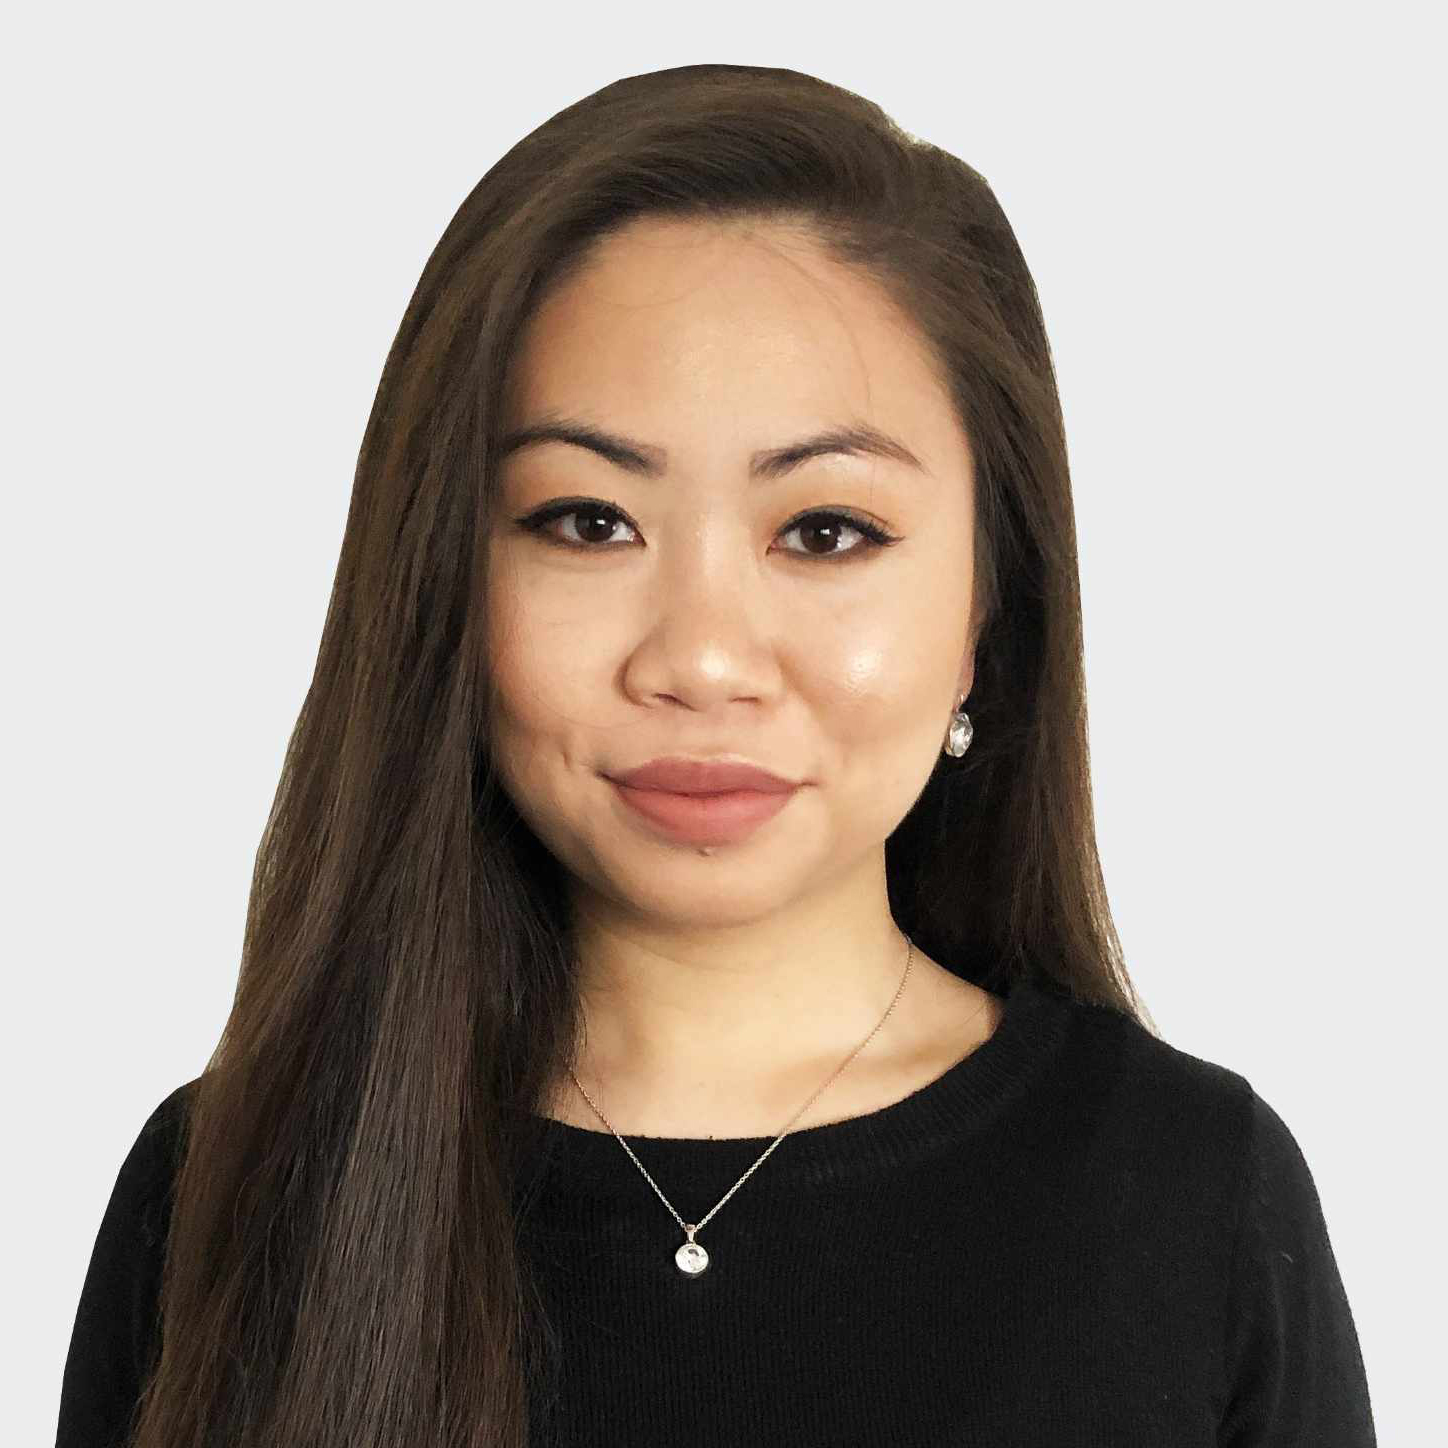 Diana Nguyen